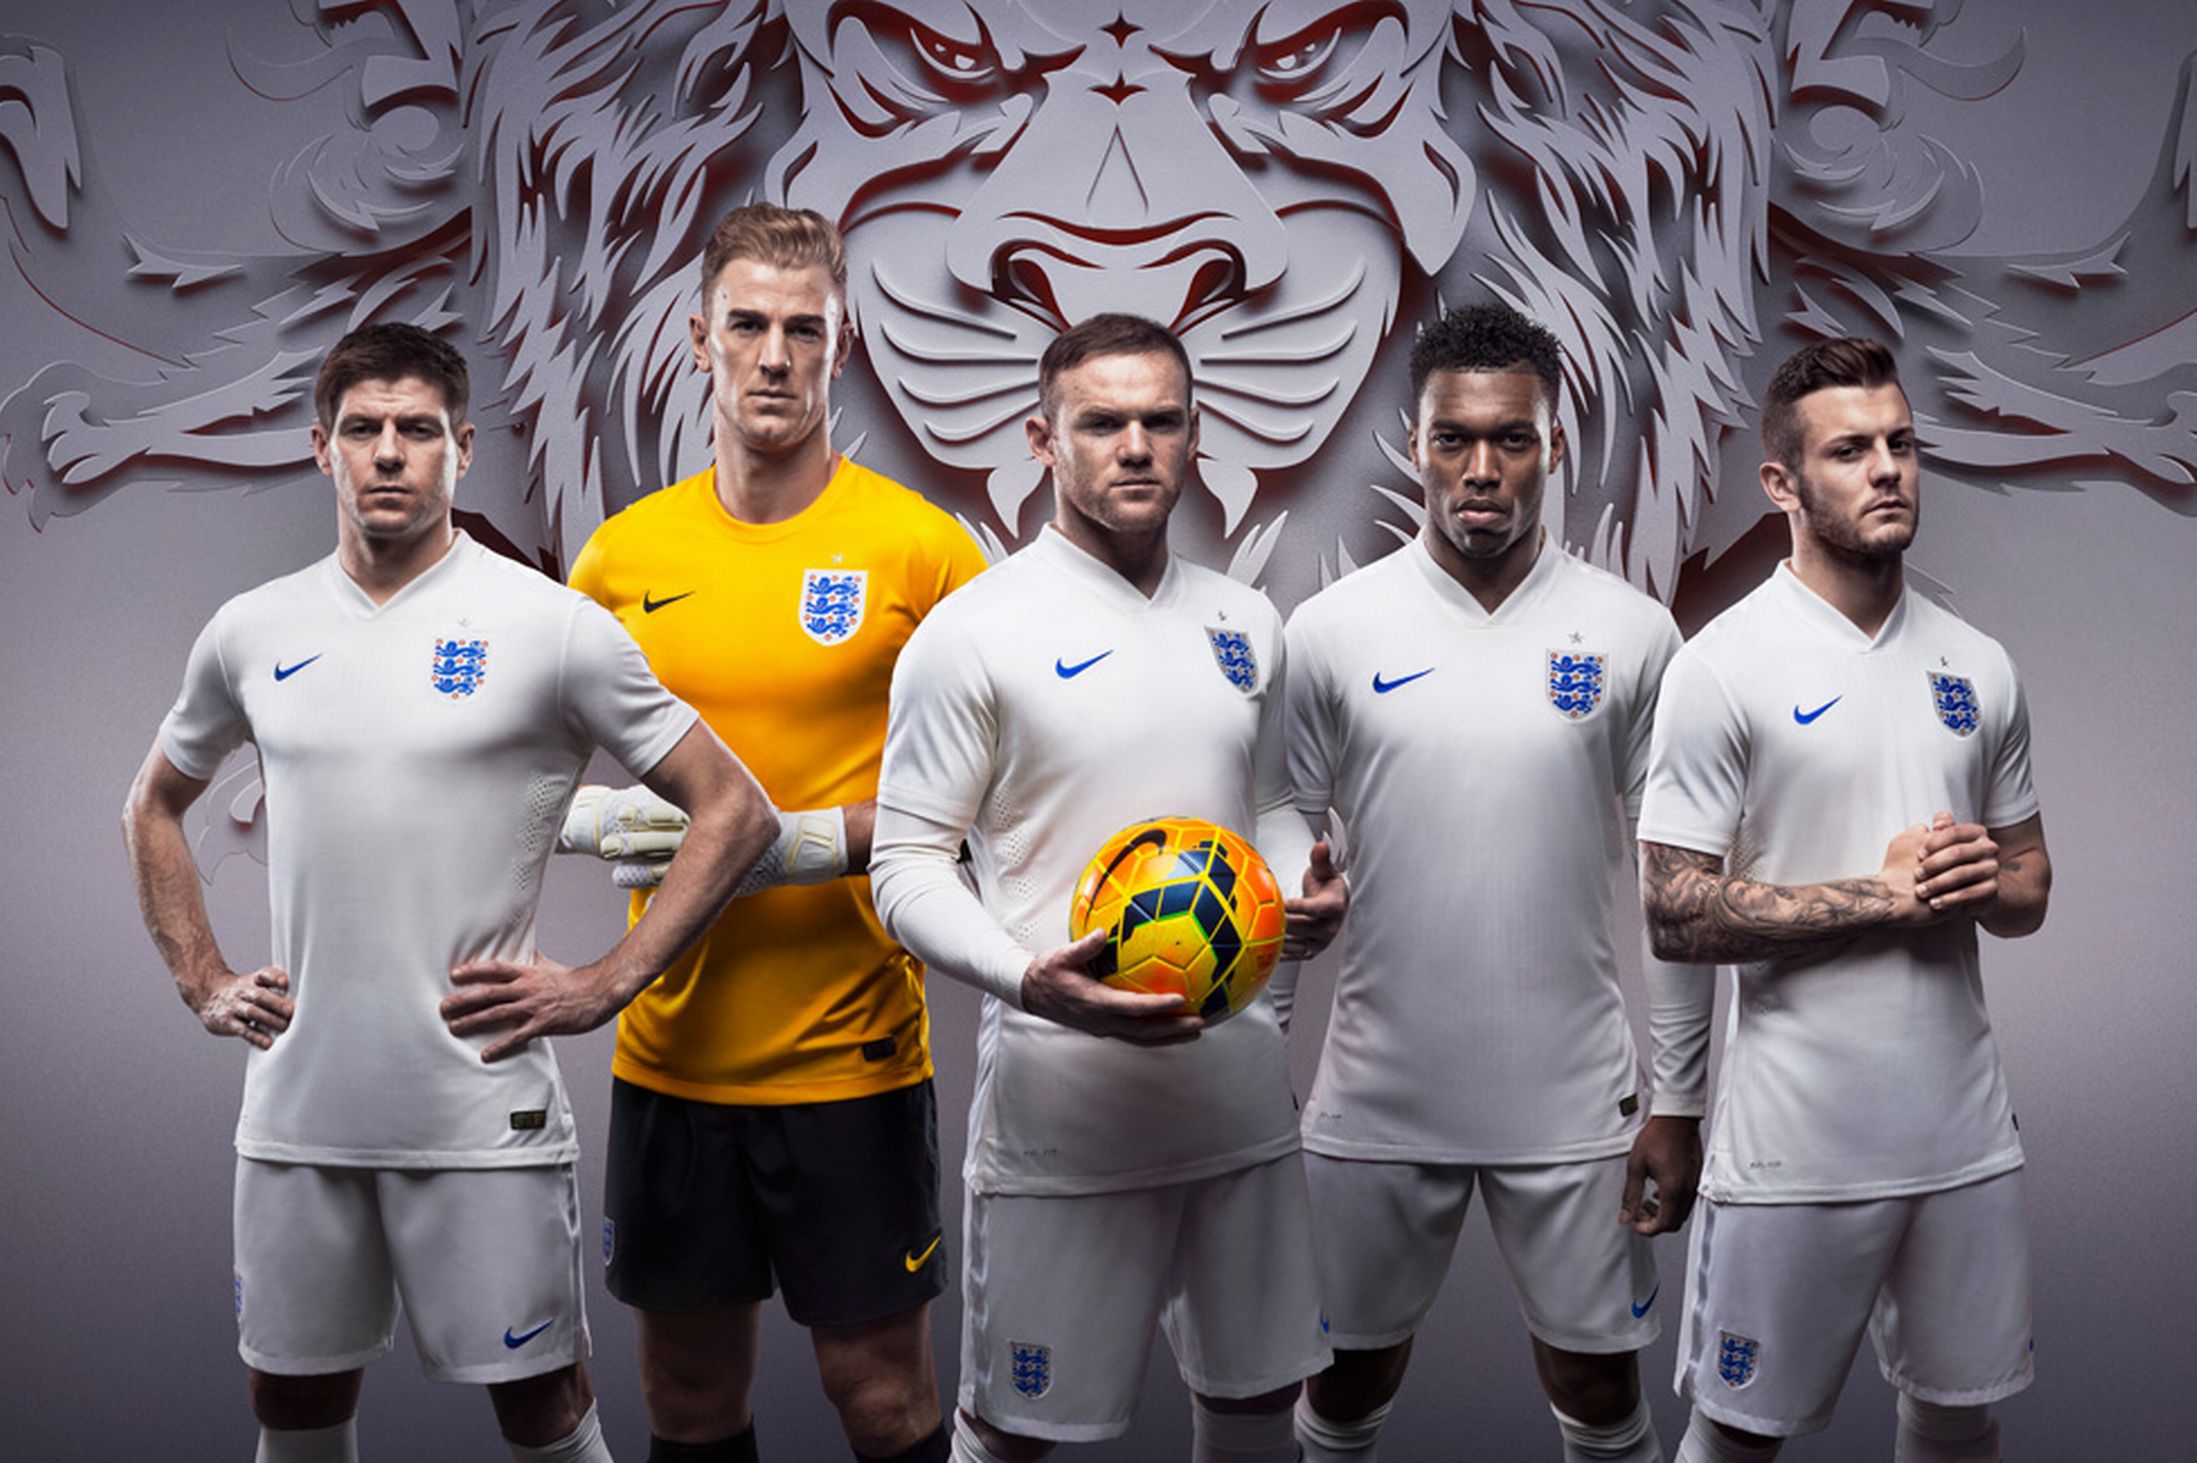 FIFA World Cup, England, Steven Gerrard, Joe Hart, Wayne Rooney, Daniel Sturridge, Jack Wilshere